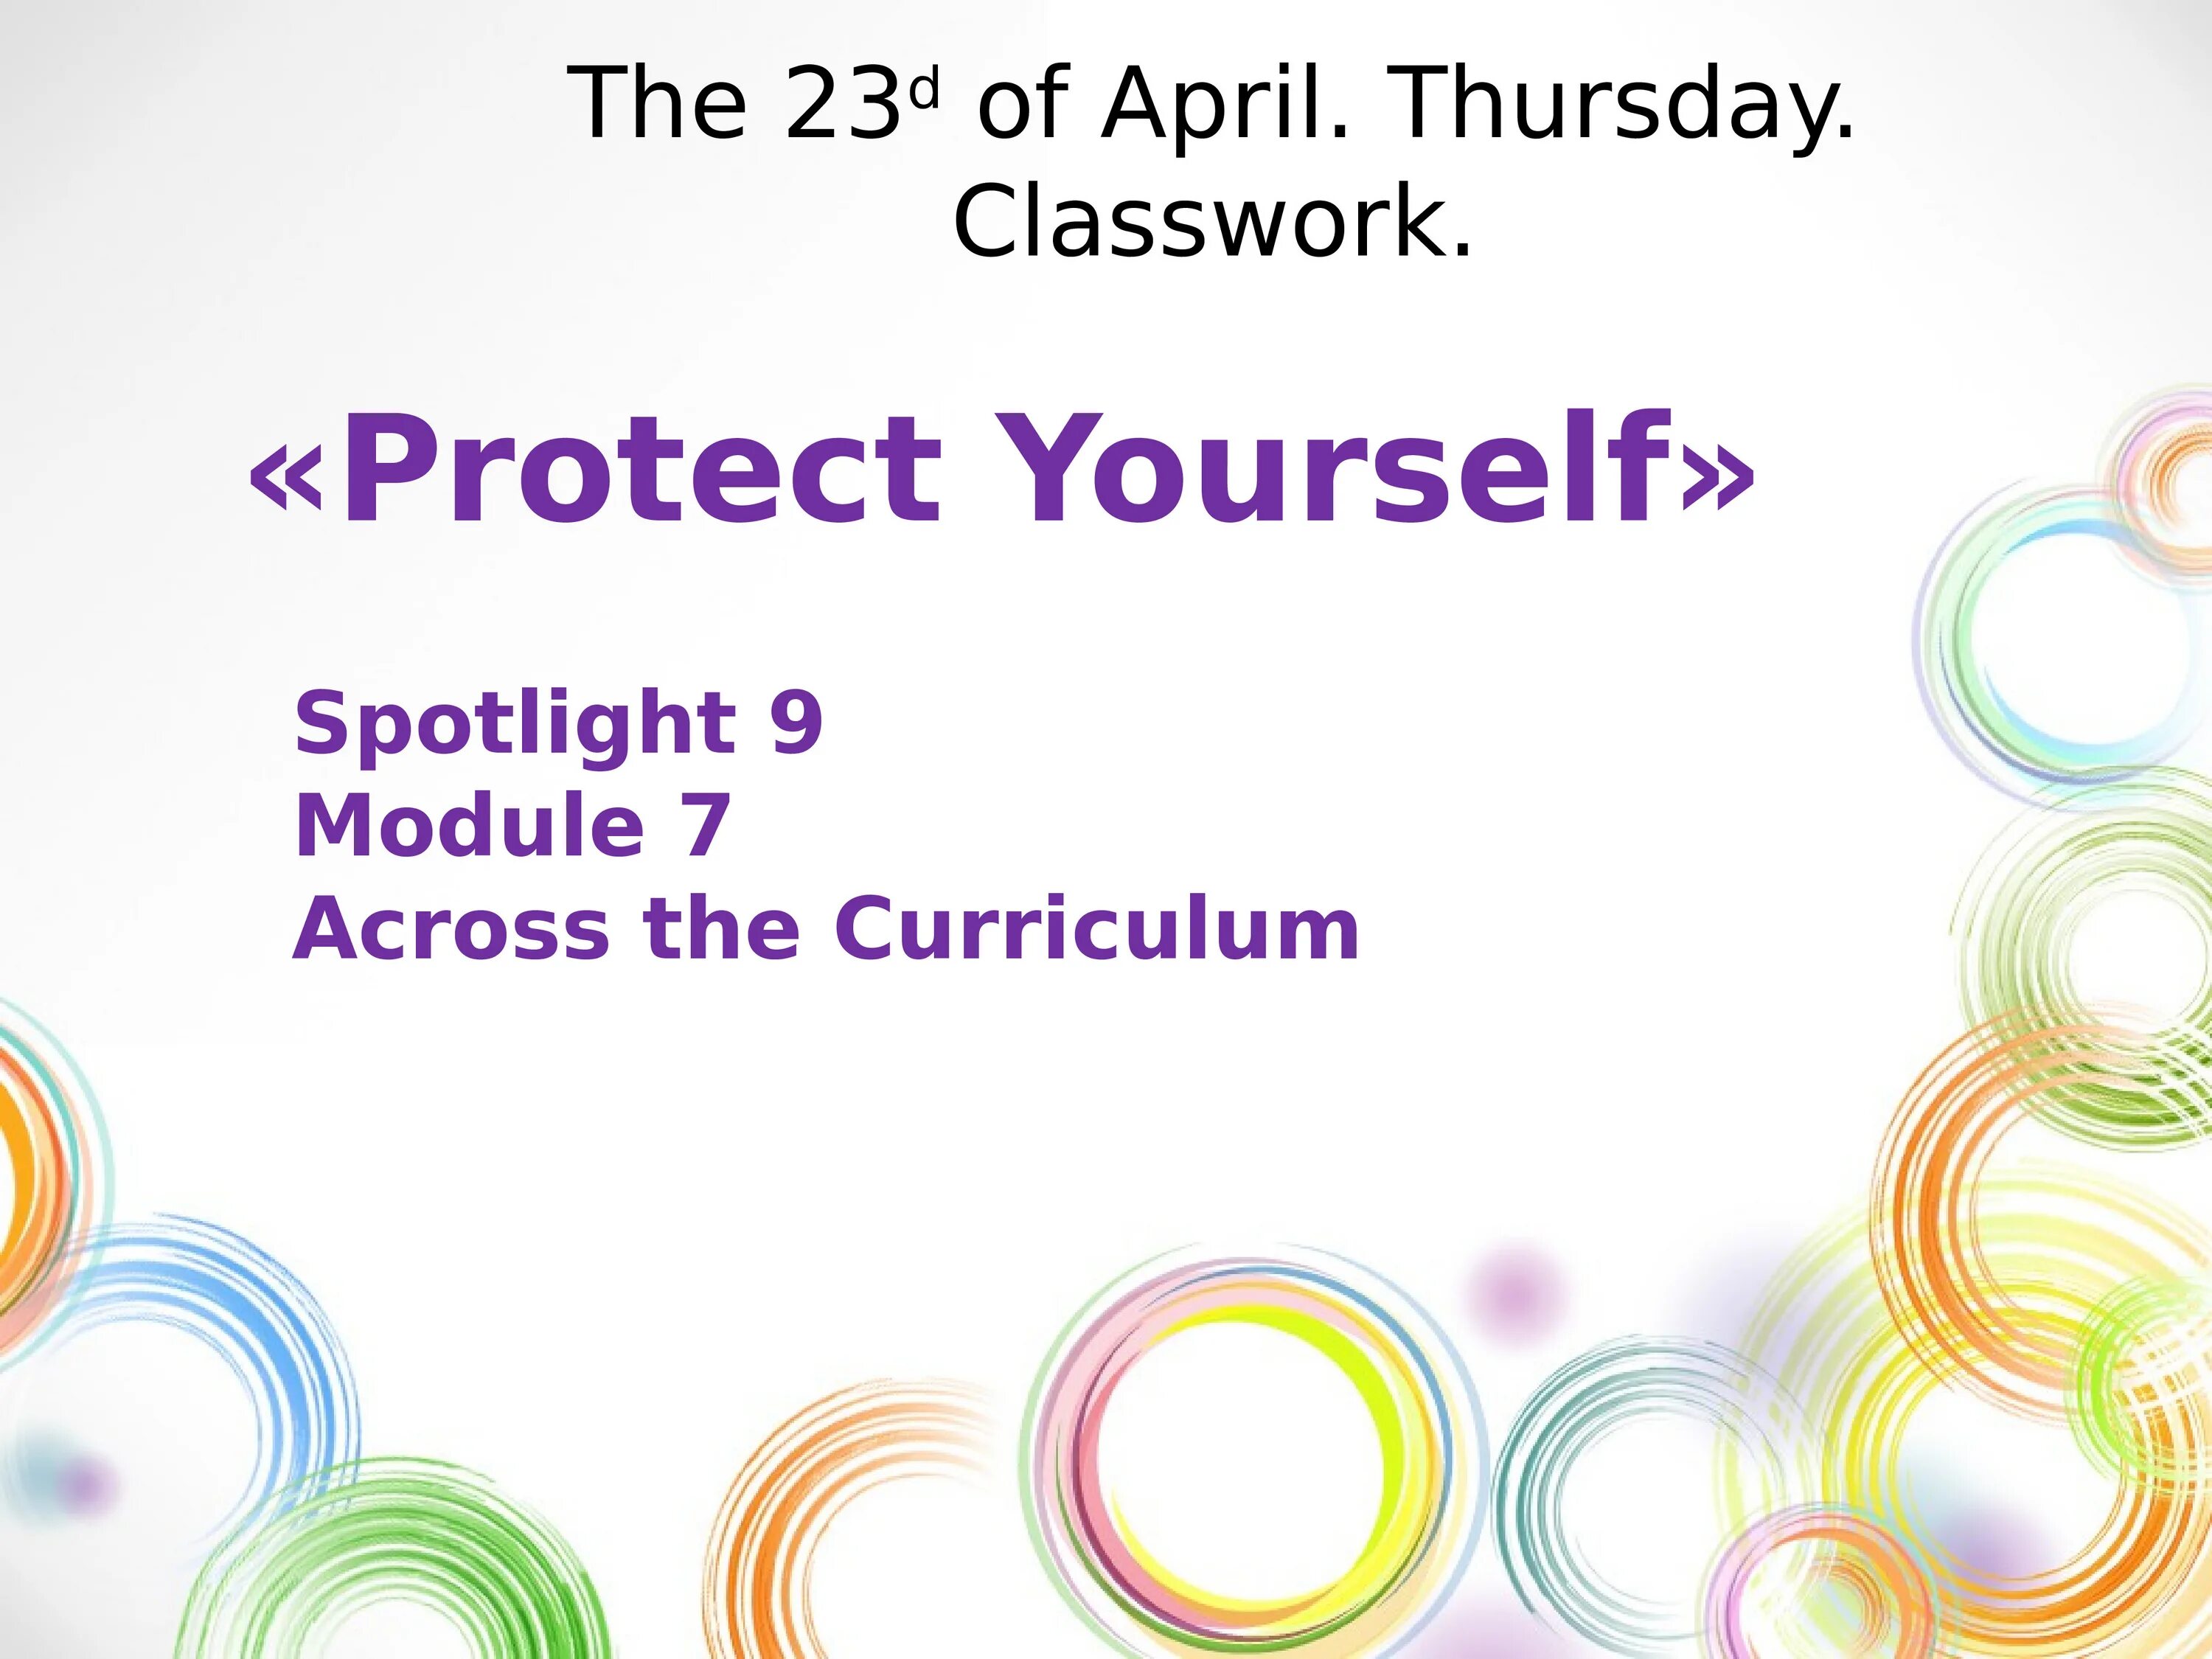 Spotlight 9 2023. Protect yourself 9 класс Spotlight. Across the Curriculum. Модуля across the Curriculum 7. Spotlight 7 across the Curriculum.